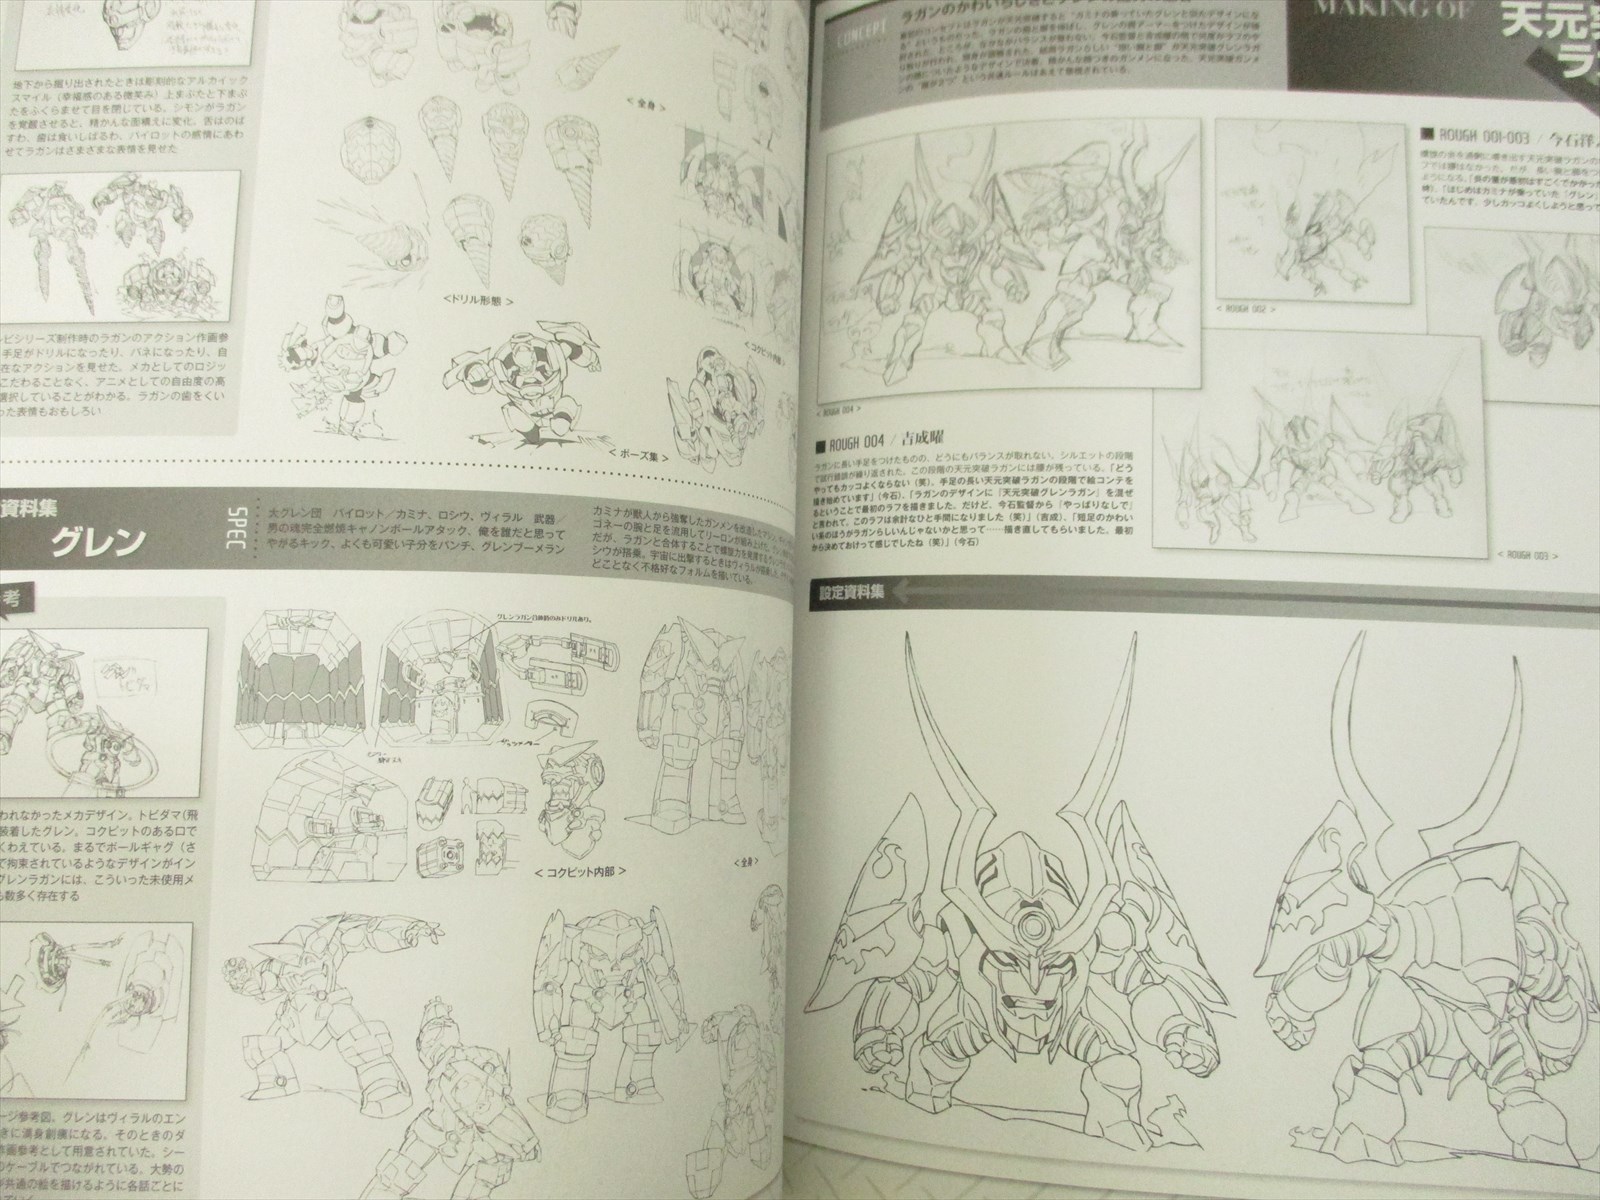 GURREN LAGANN Movie SHIGOTO DAMASHII Art Design Book Hiroyuki Imaishi KD28